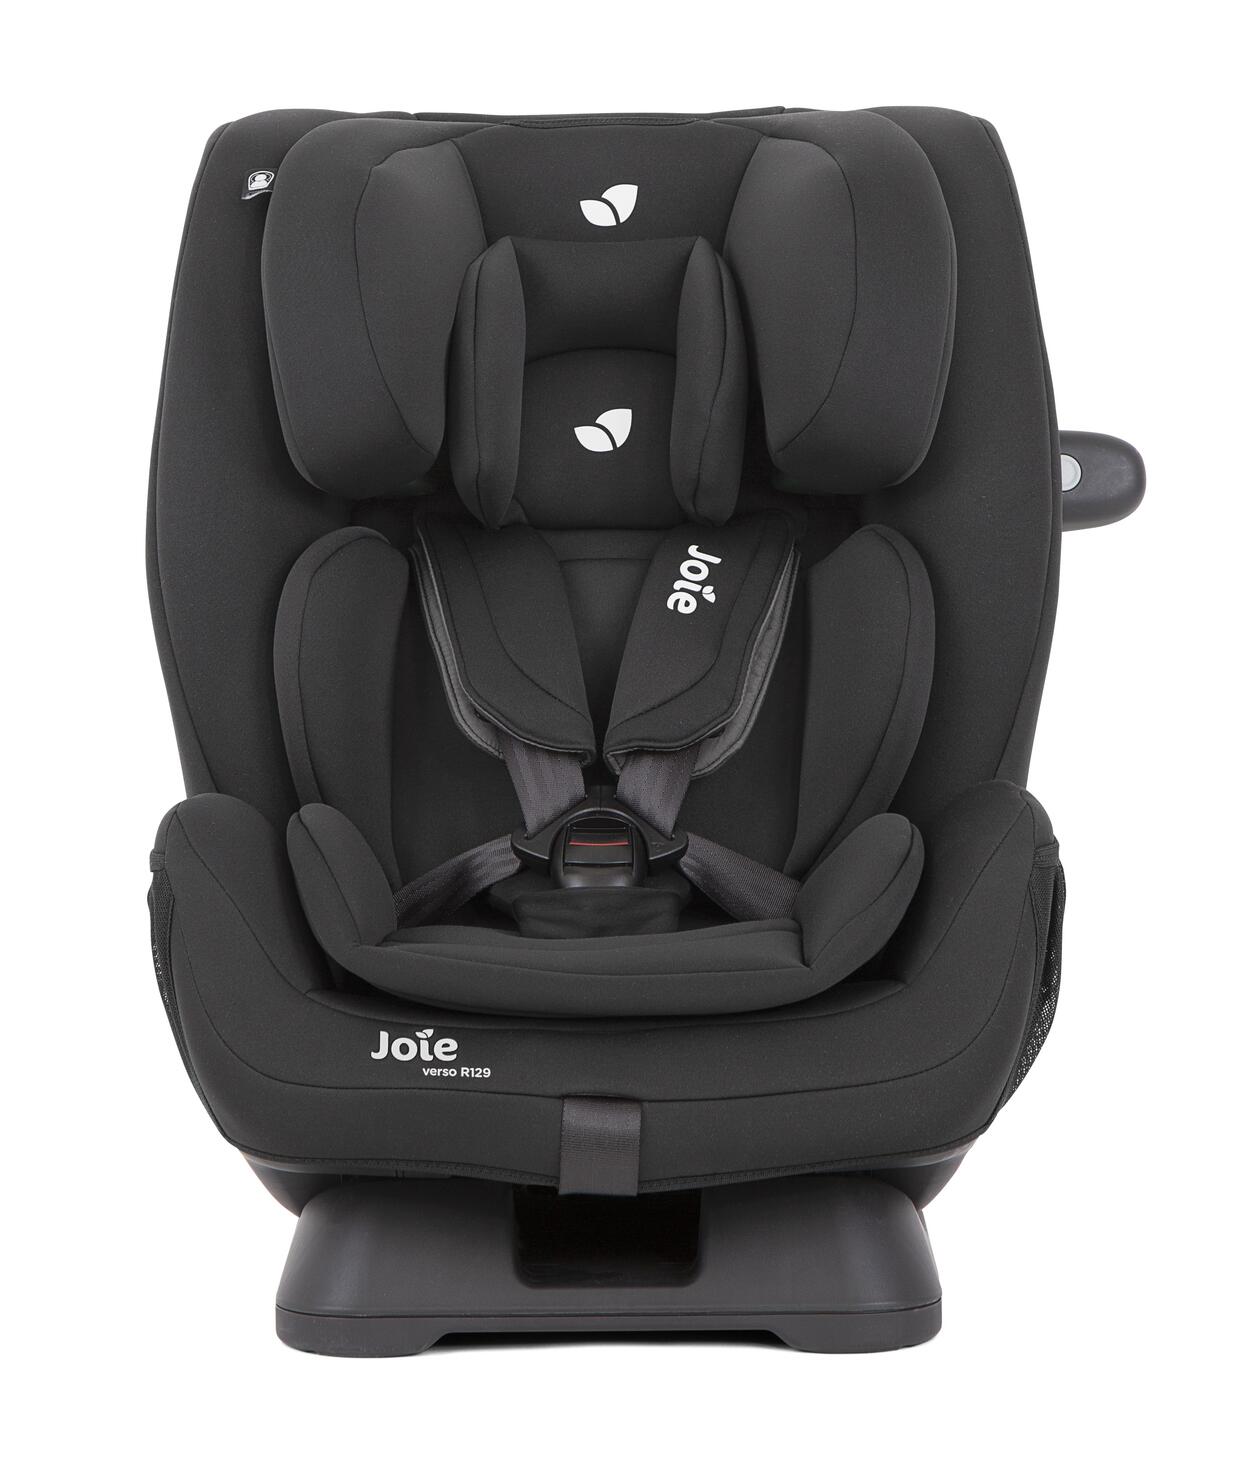 Joie Verso R129 Kindersitz